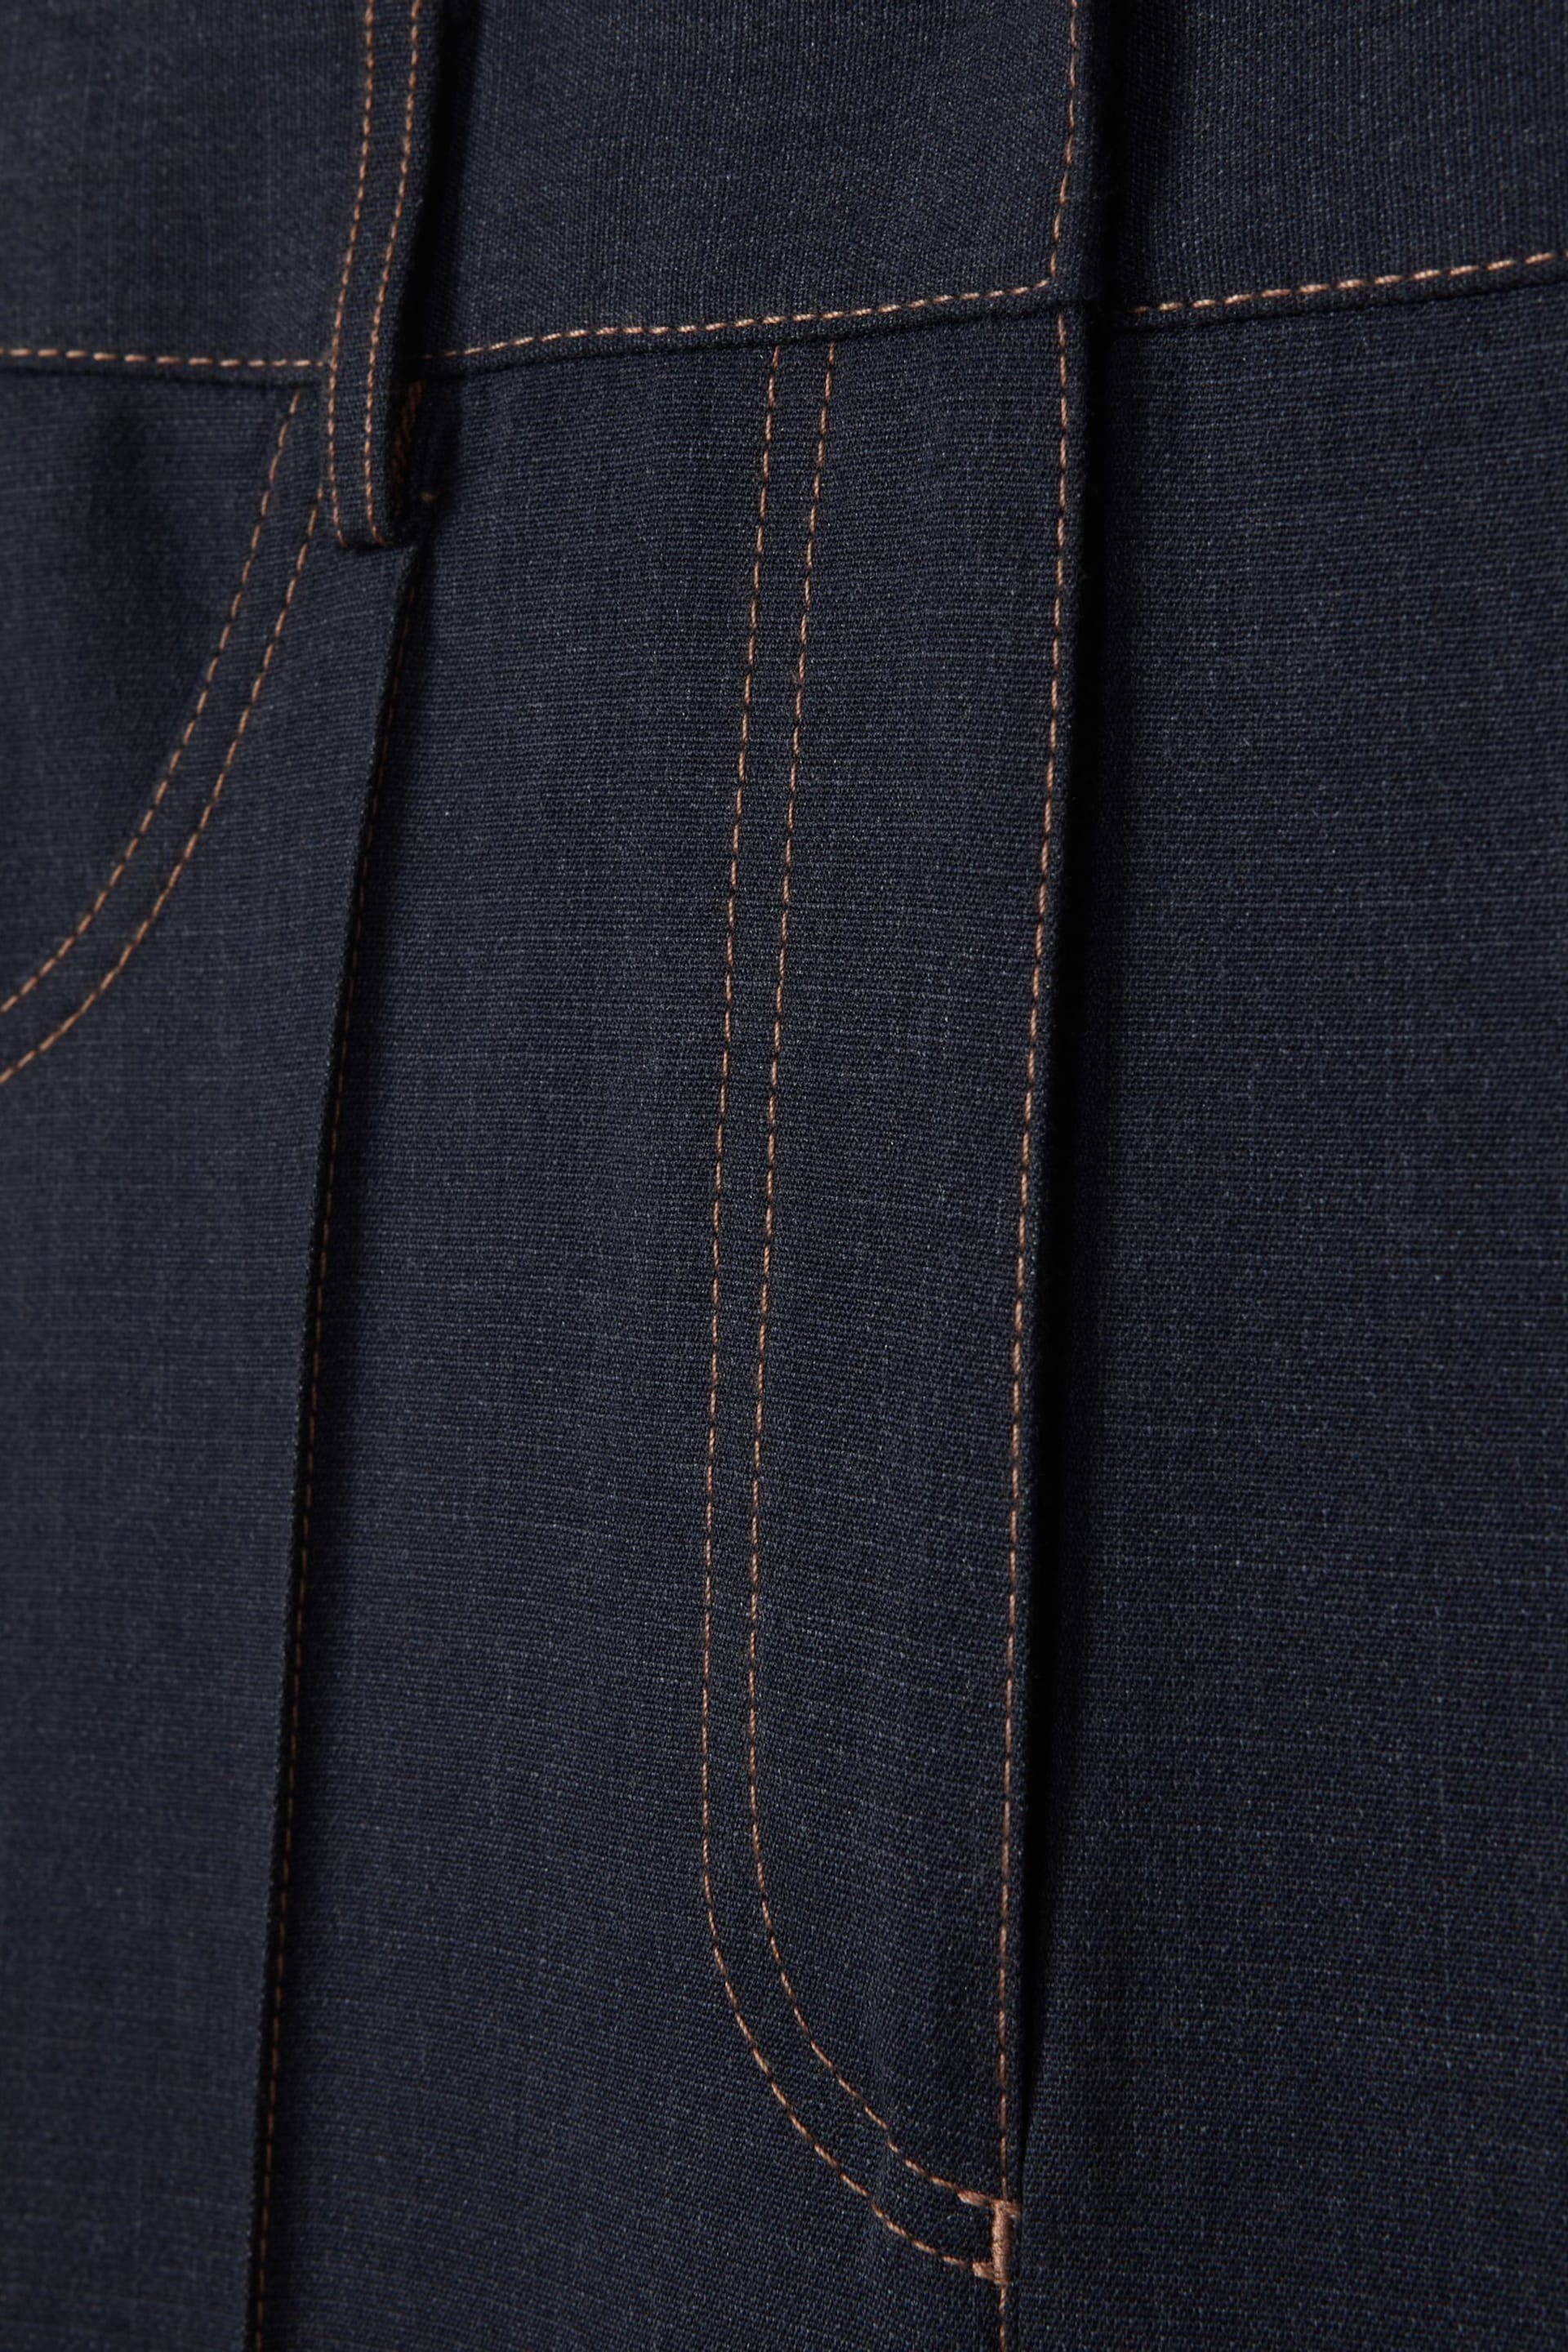 Reiss Navy Raven Wool Blend Denim Look Suit Trousers - Image 7 of 7